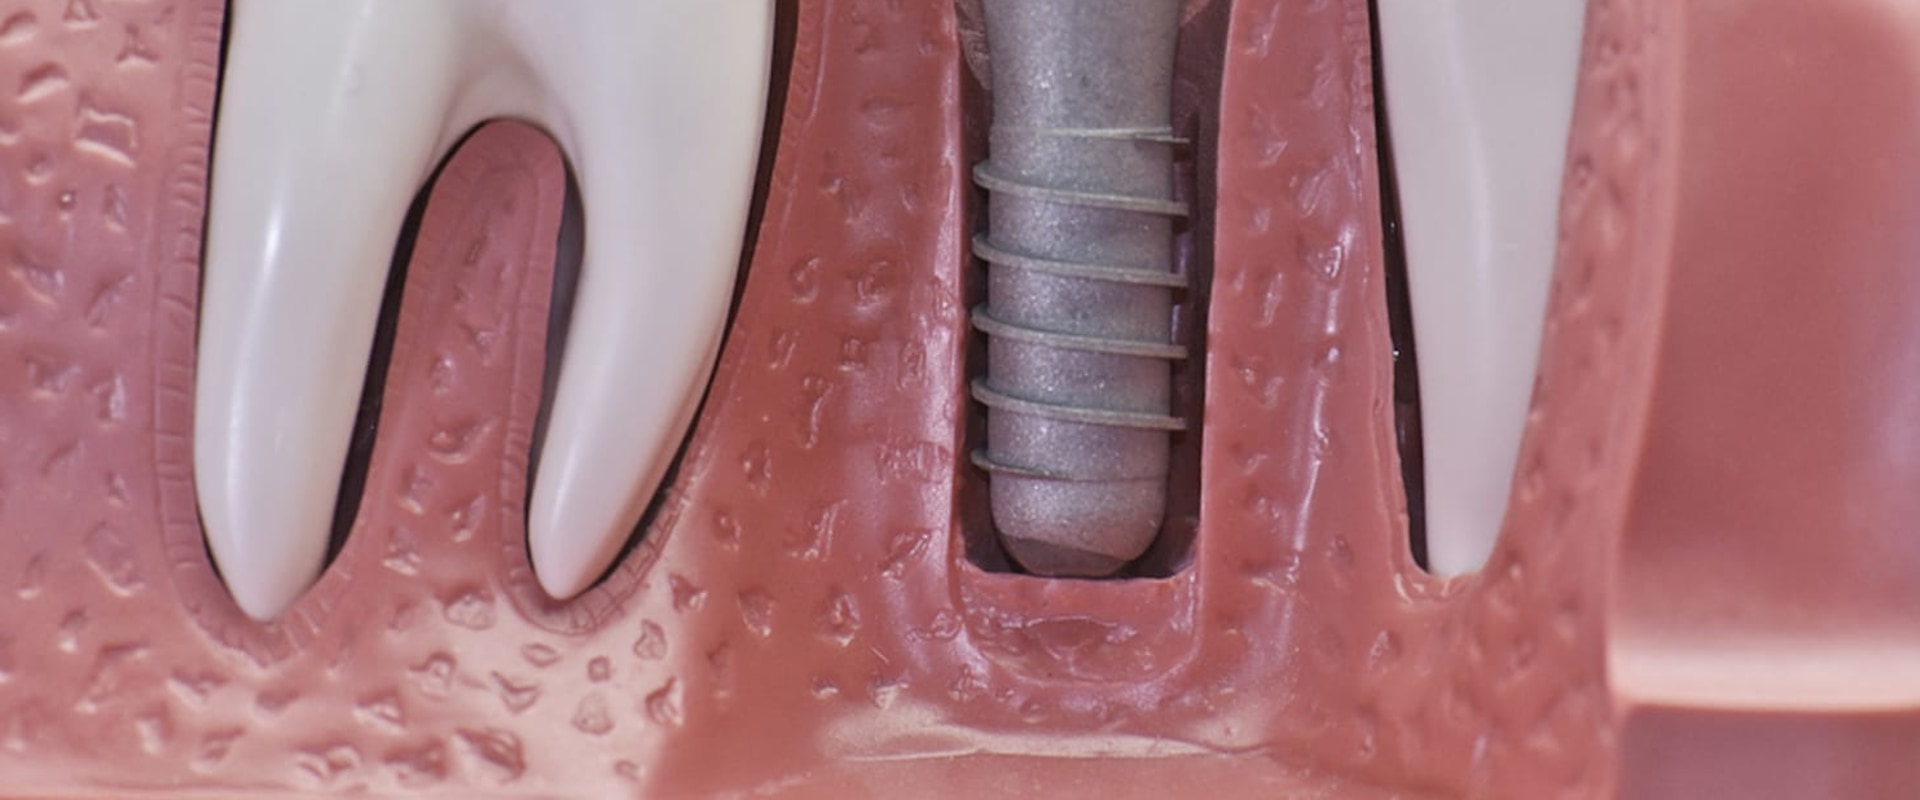 Does medical cover dental implants?